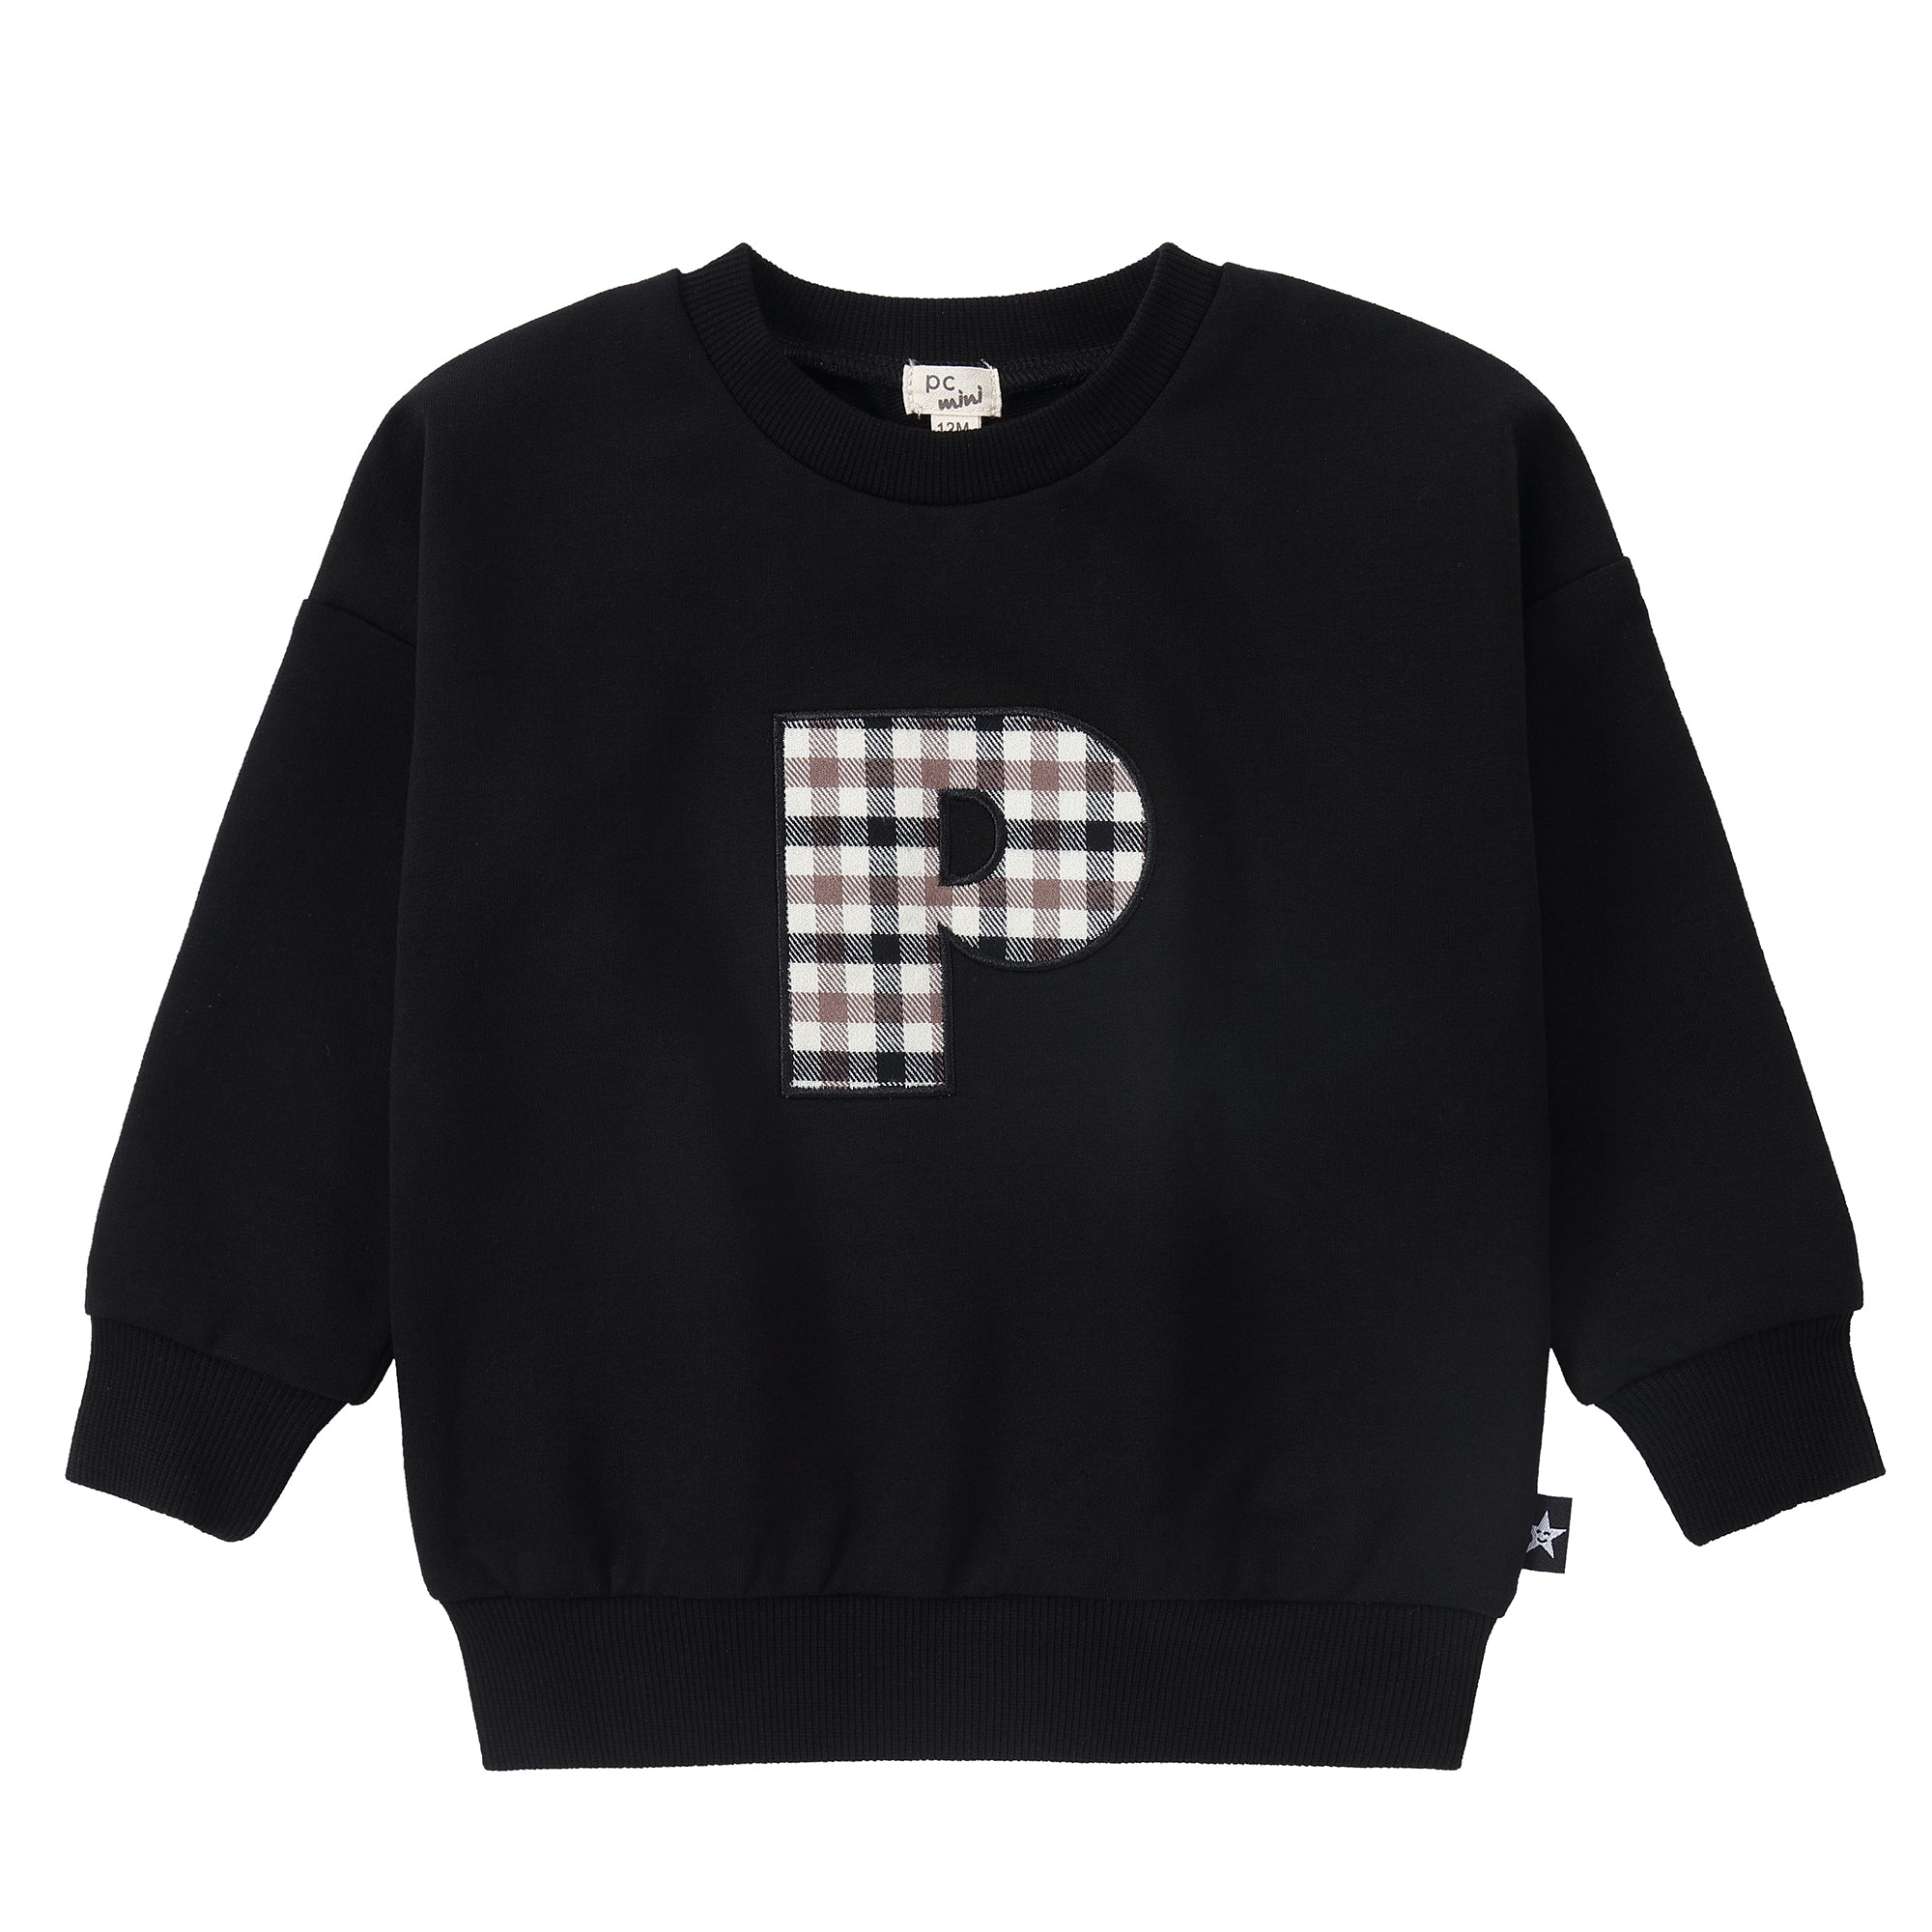 Black Sweatshirt With Plaid "P" Applique